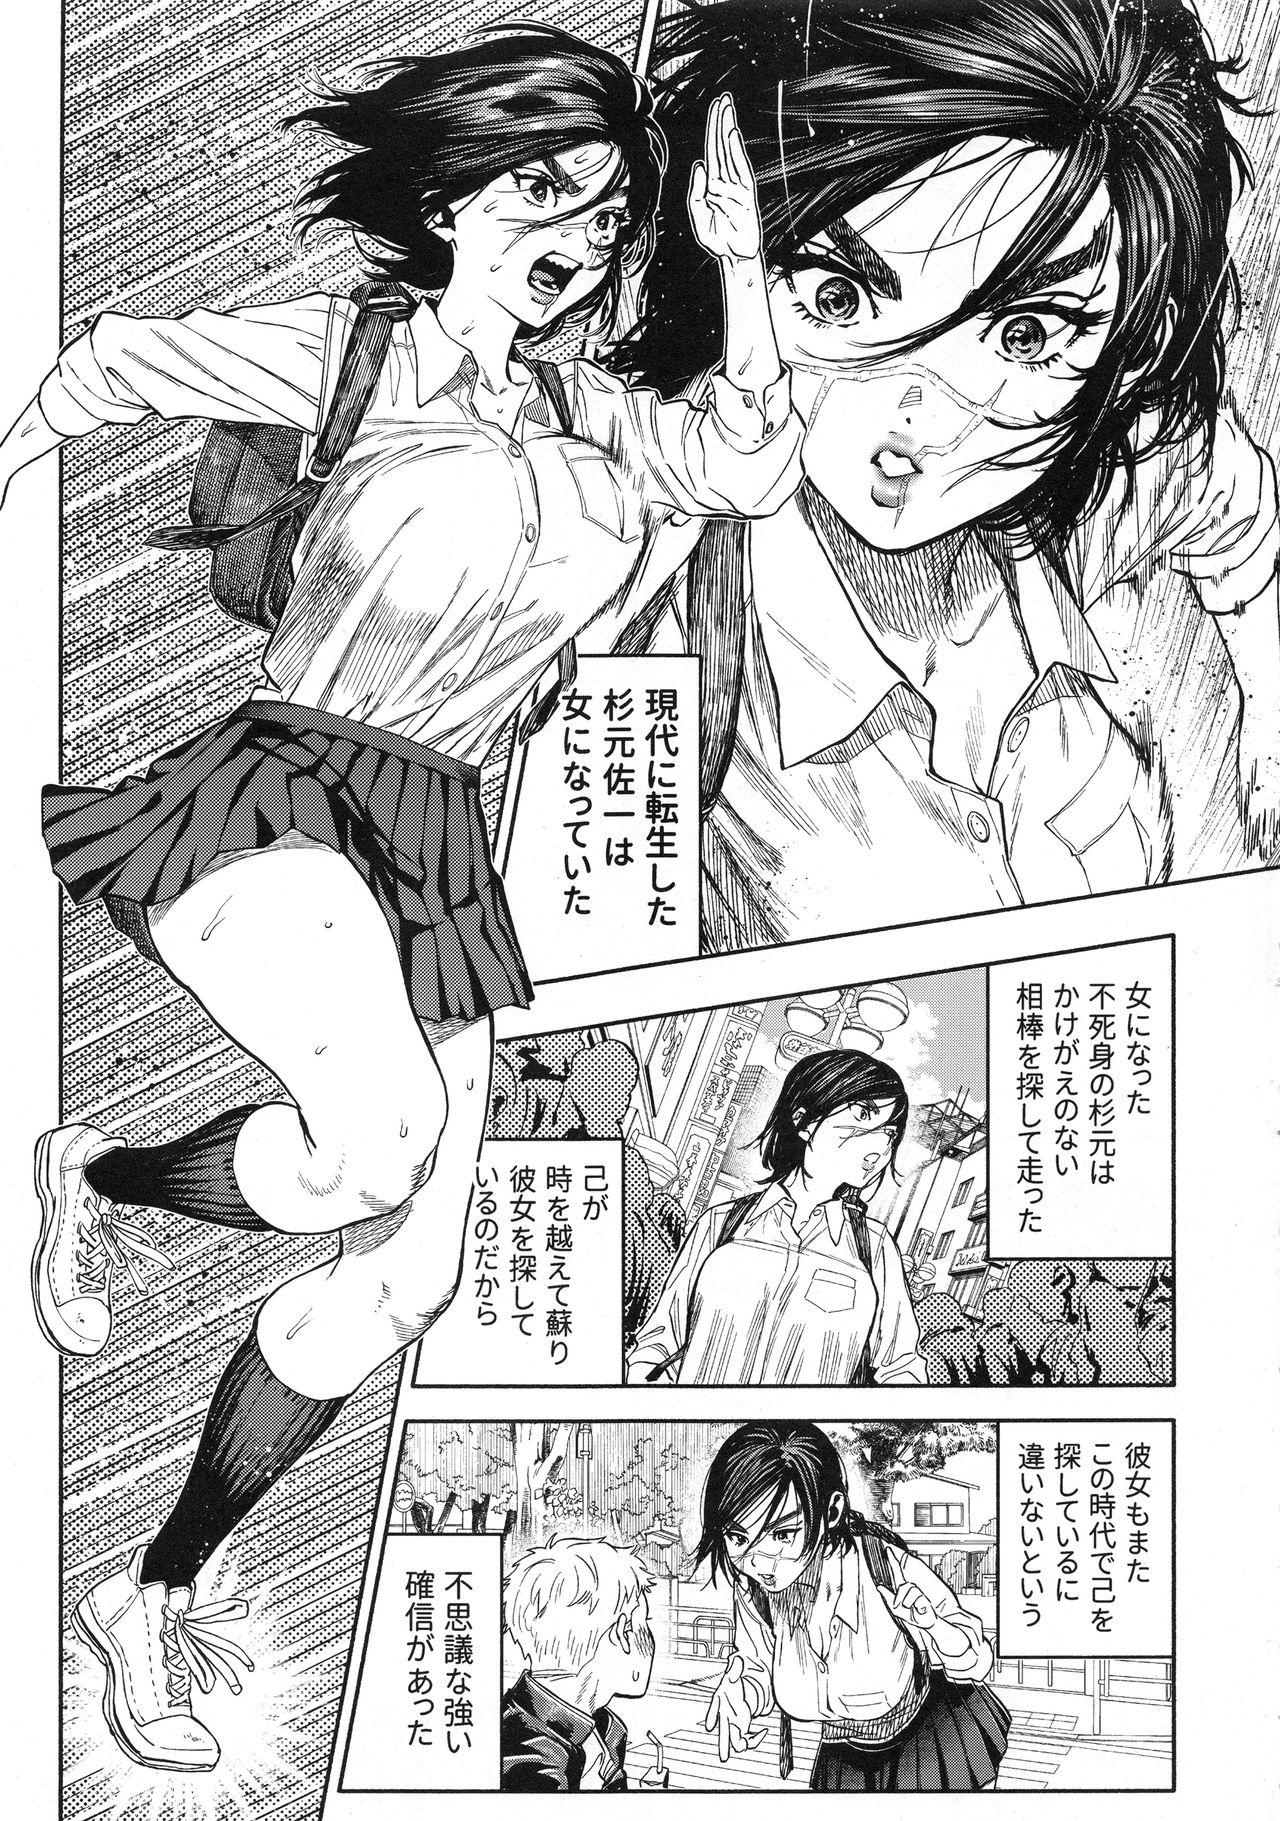 Money Koisugi - Golden kamuy Pregnant - Page 3